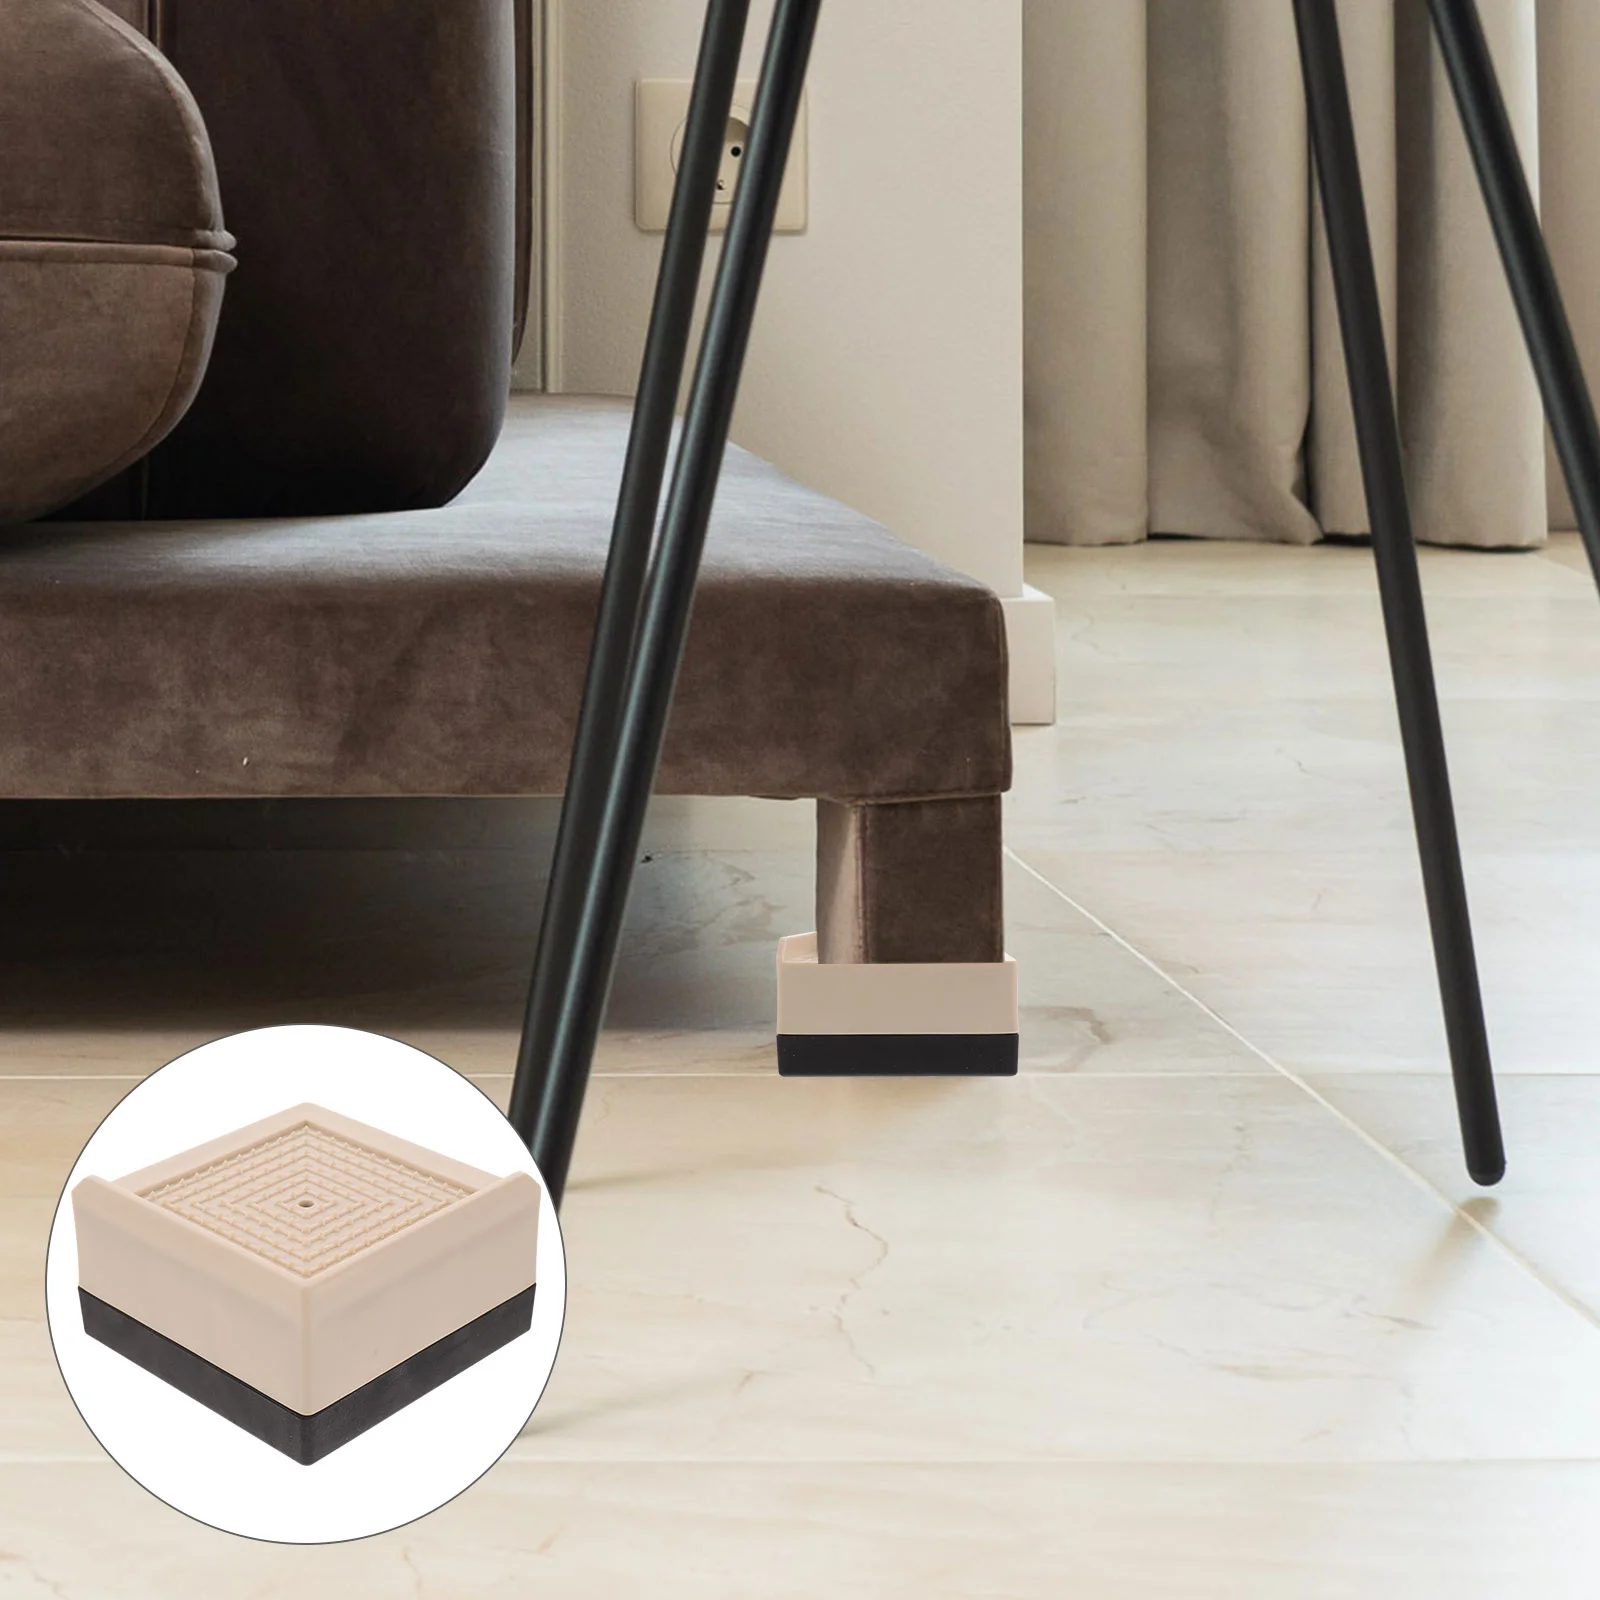 

Bed Mat Table Risers Floor Sofa Lifts Desk Raisers Blocks Couch Legs Heavy Duty Chair Bedstead 8.5x8.5x5cm